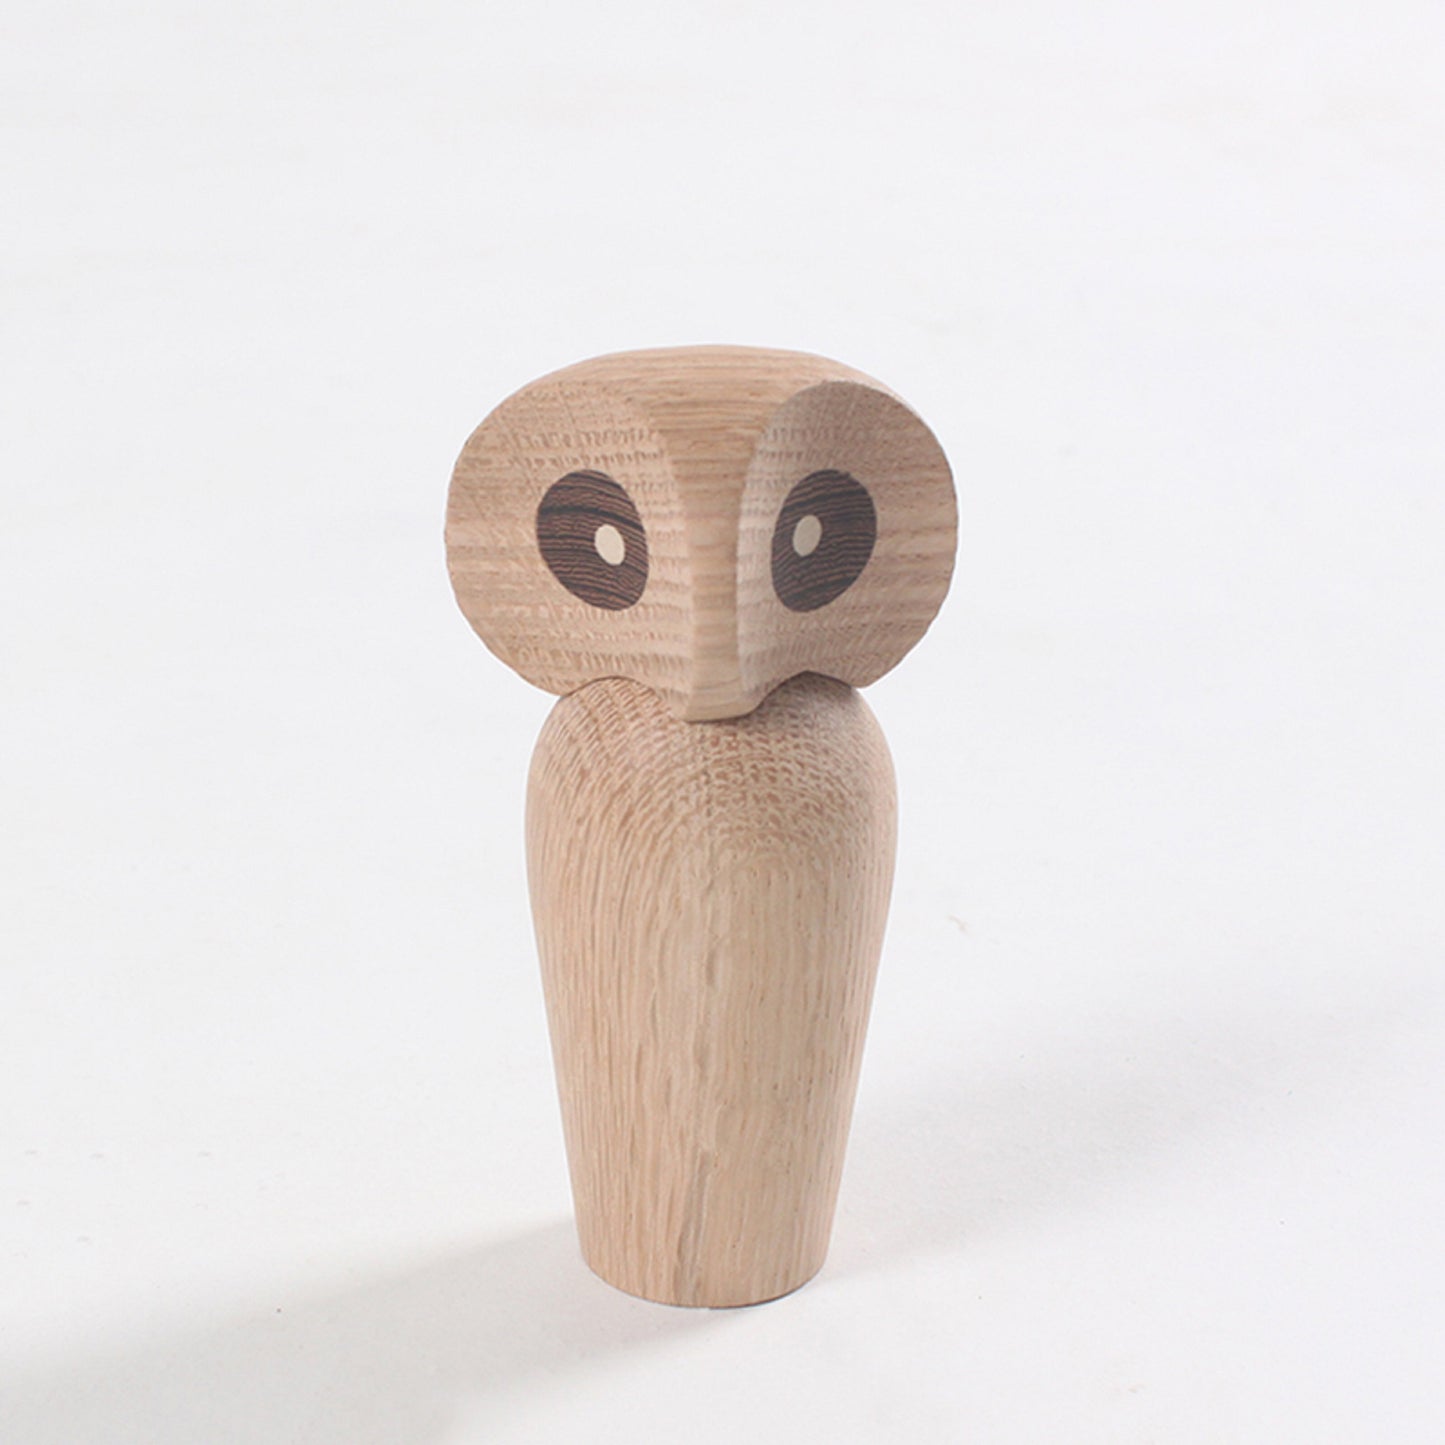 JIYUERLTD Wooden Owl,Wood Carving Owl,wood bird birthday present,Puppet,wood gift